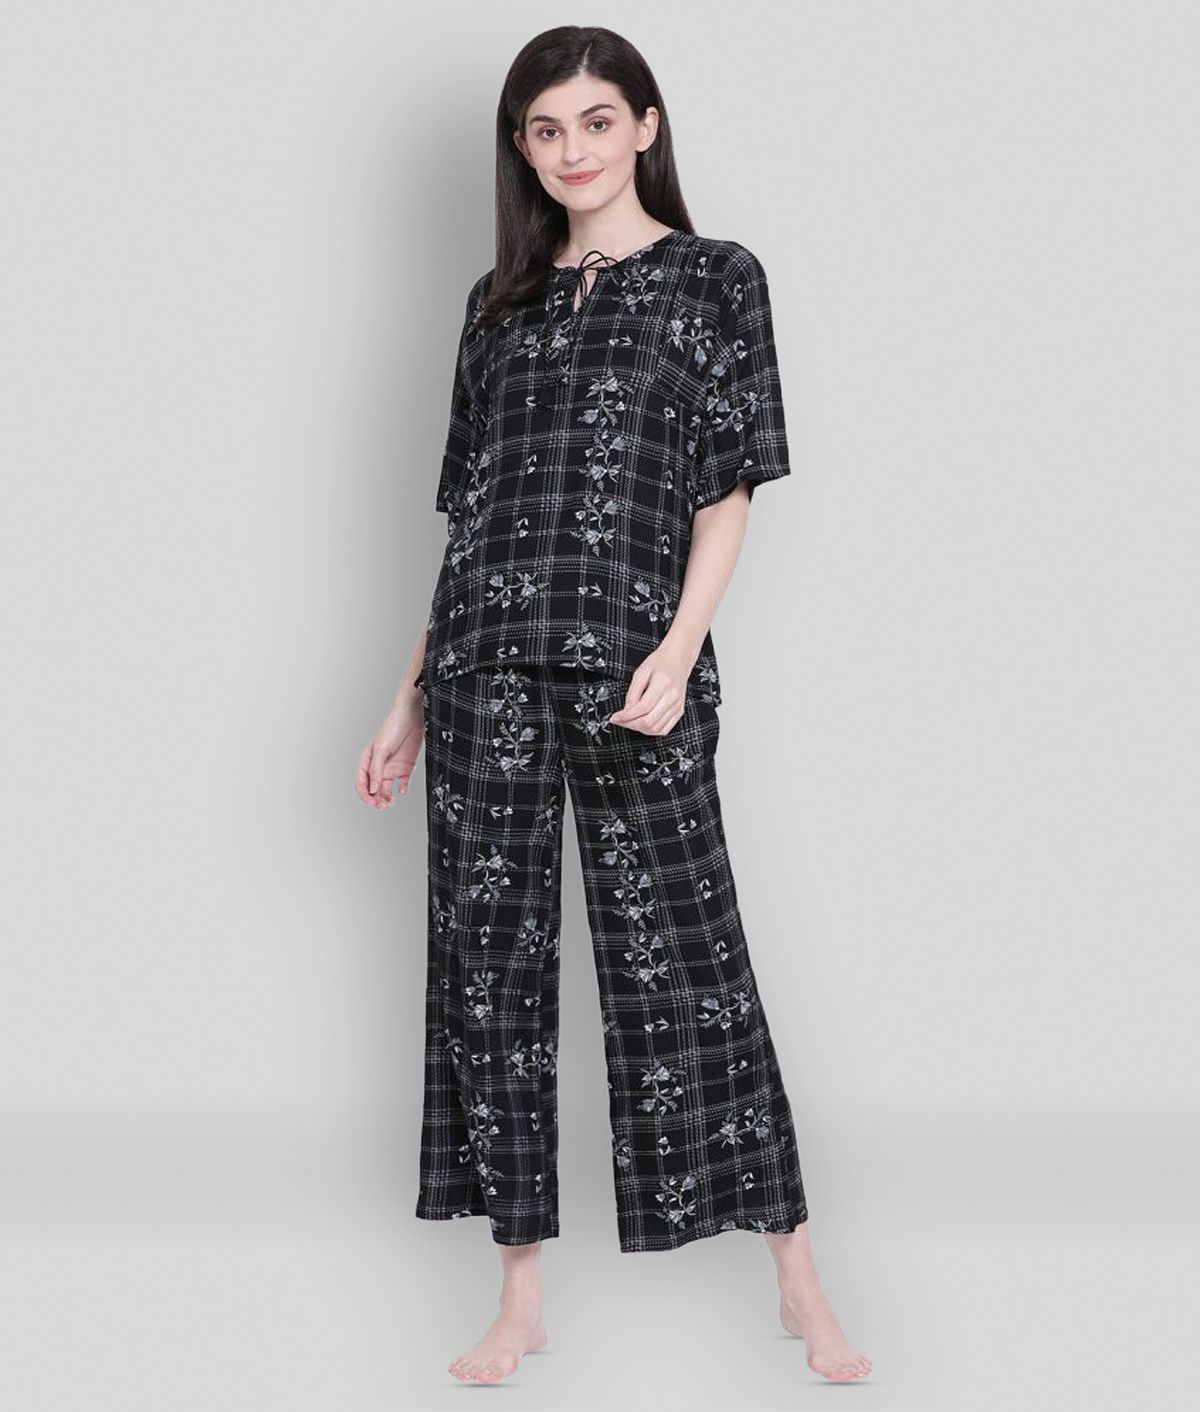     			Clovia - Black Rayon Women's Nightwear Nightsuit Sets ( Pack of 2 )